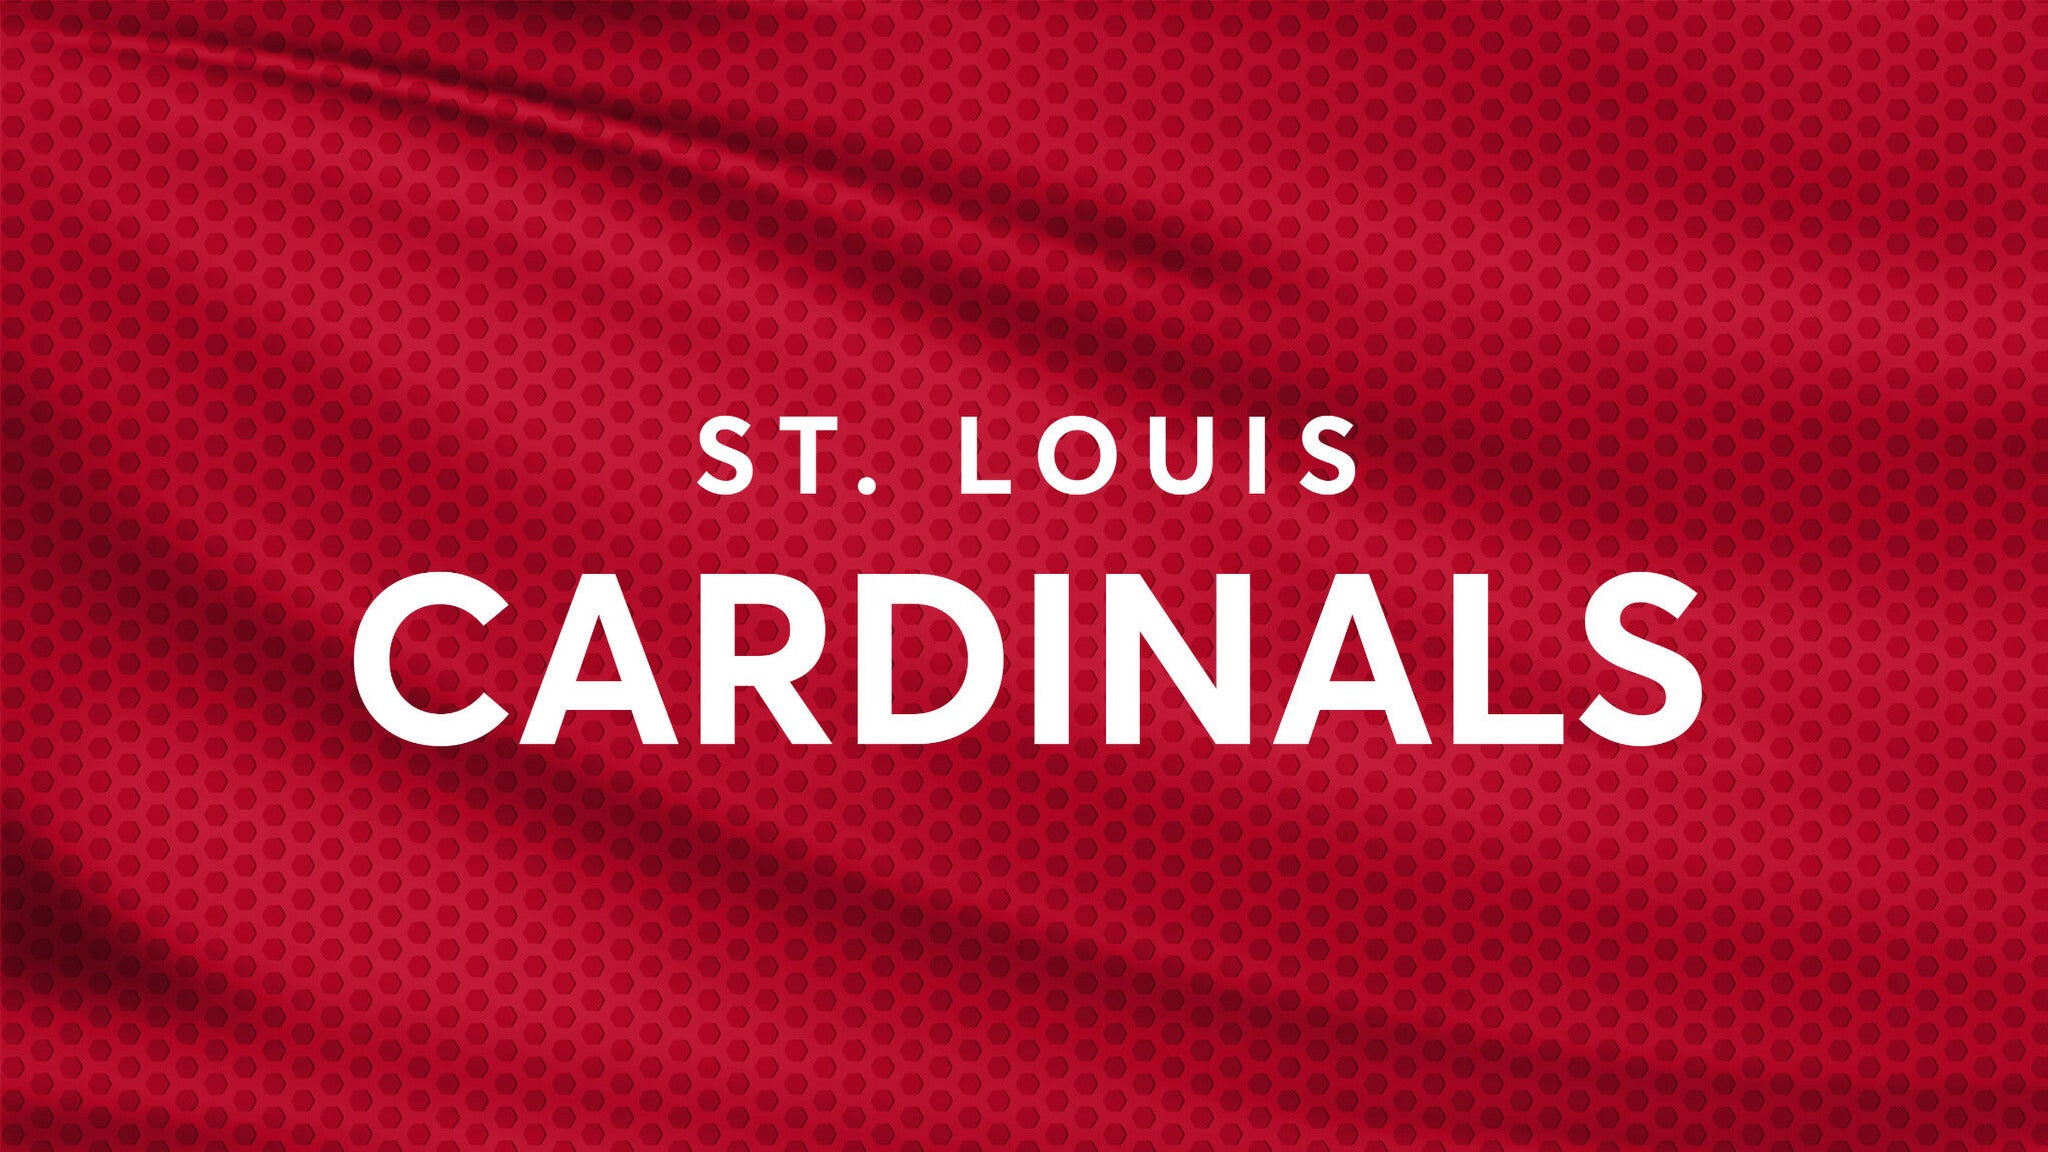 St. Louis Cardinals Parking Tickets | Event Dates & Schedule | www.lvbagssale.com